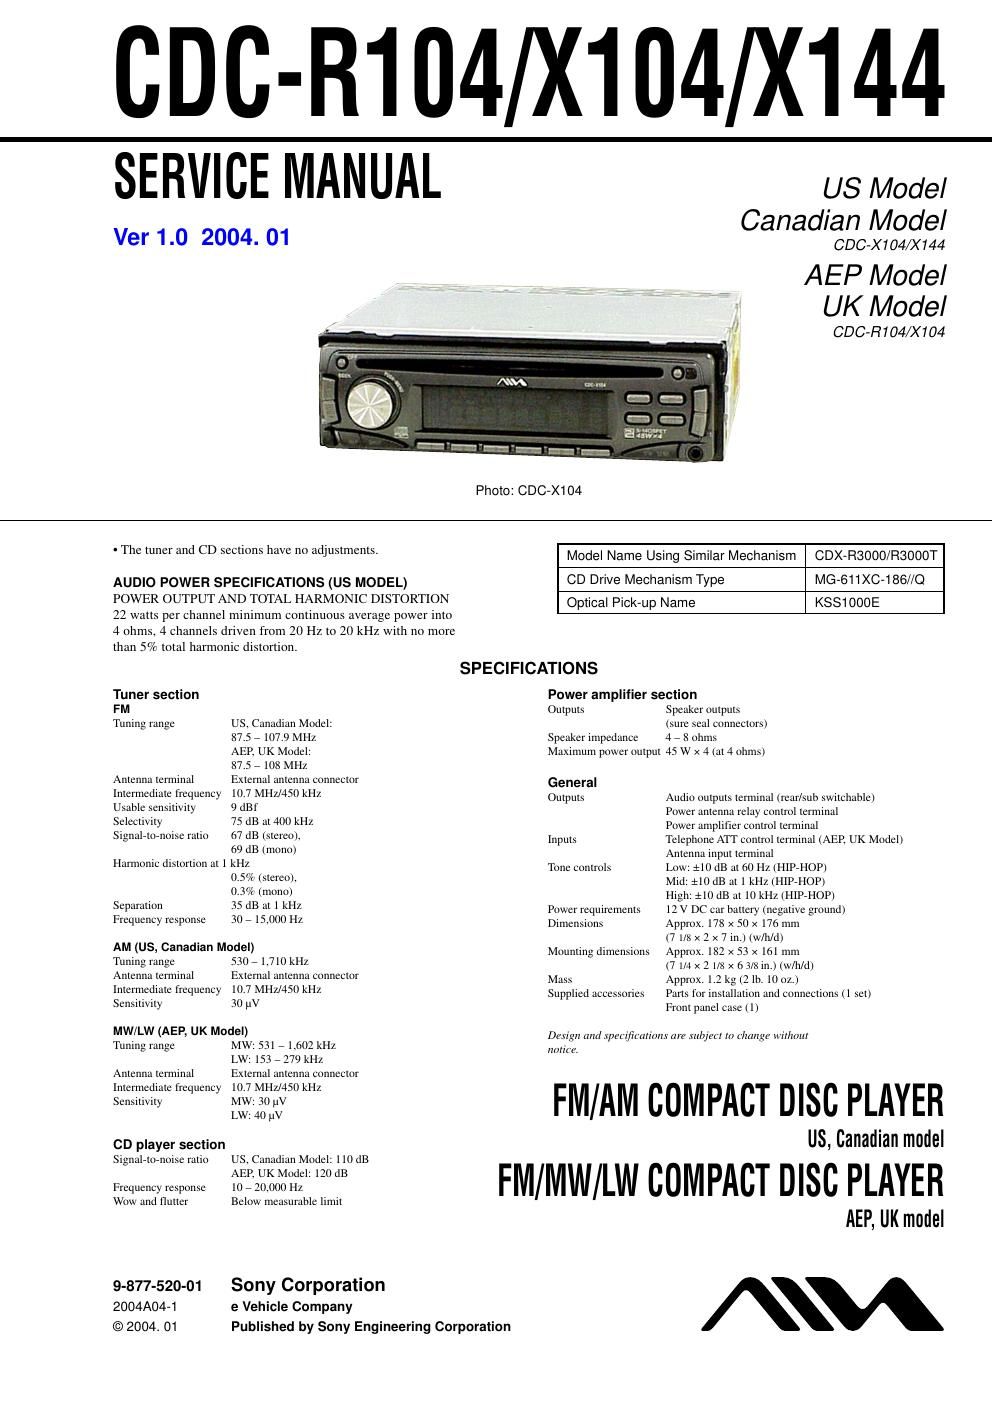 sony cdc r 104 service manual